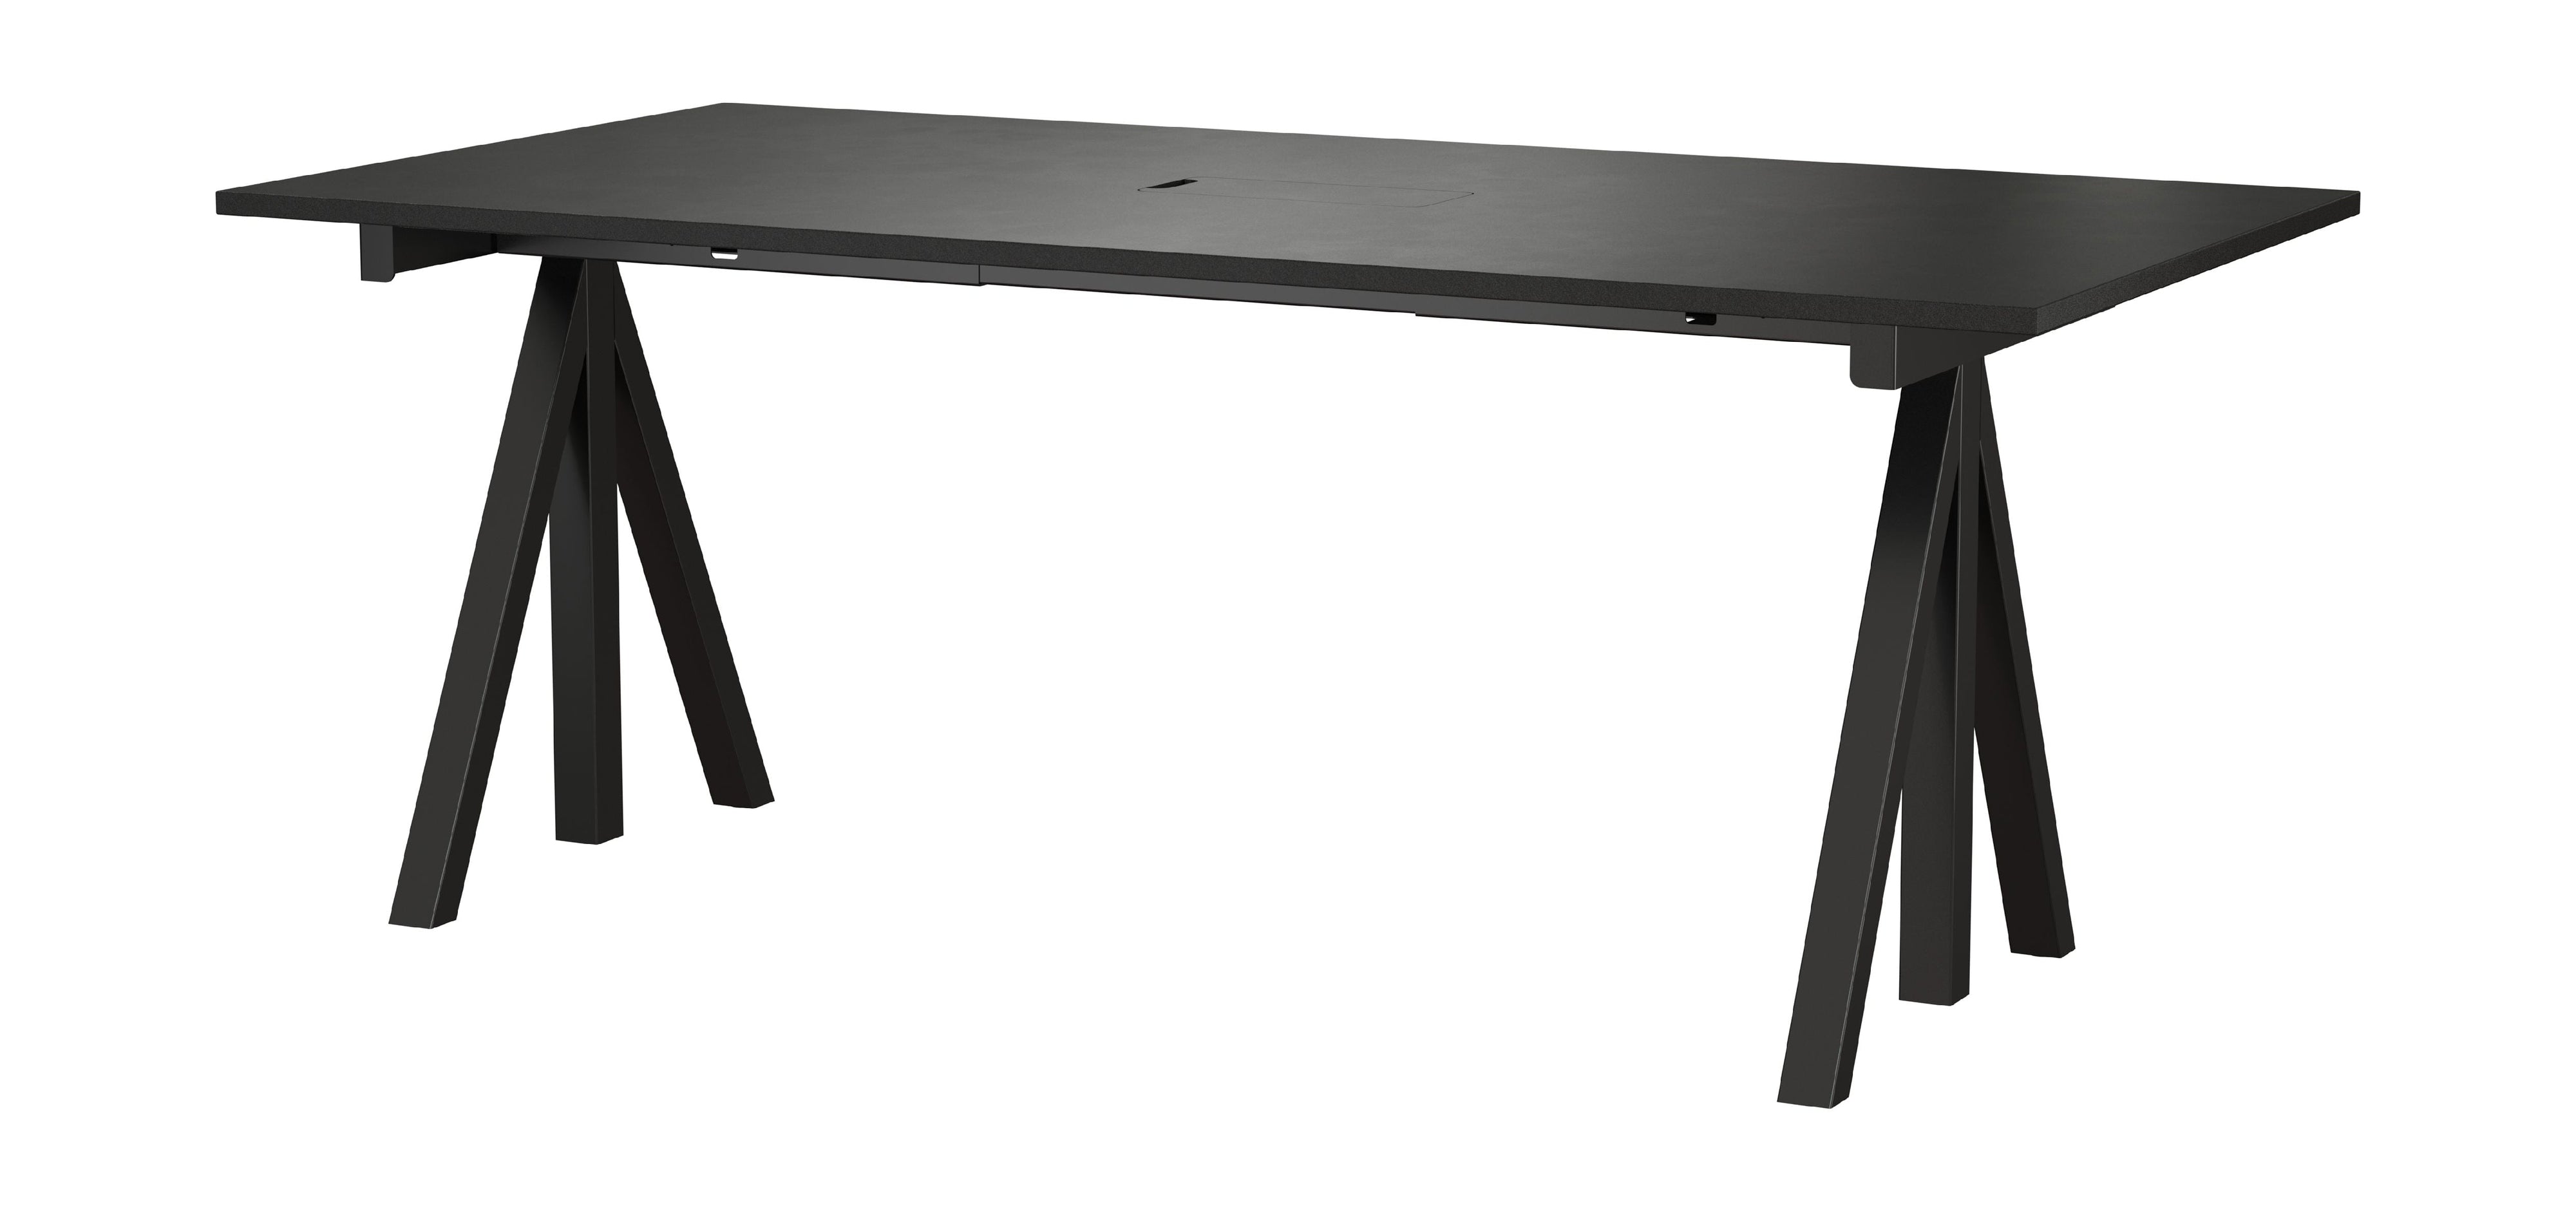 String Furniture Works Work Table 90x180 Cm, Black/Black